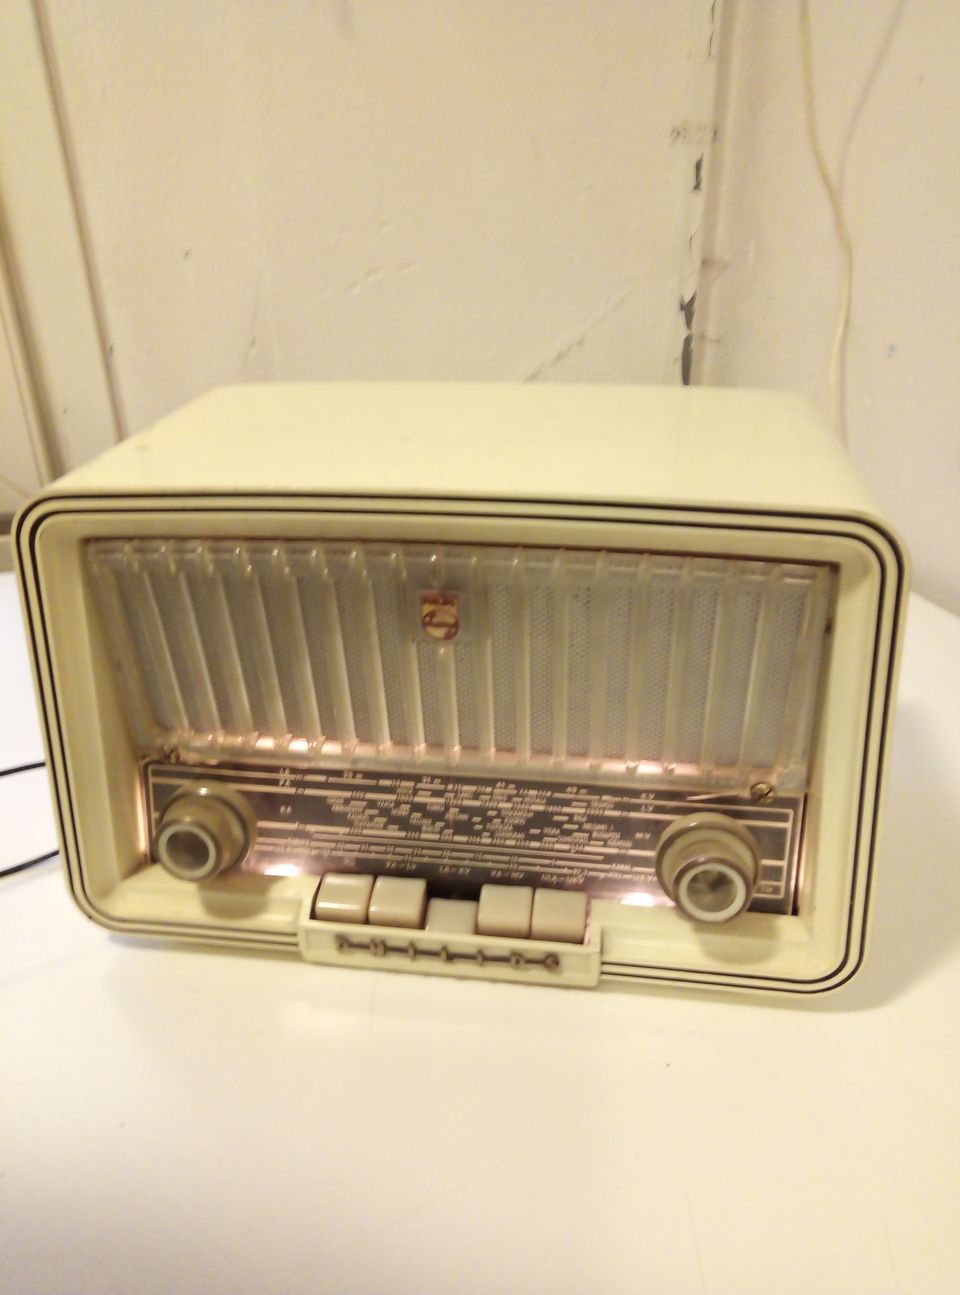 Philips retro radio.